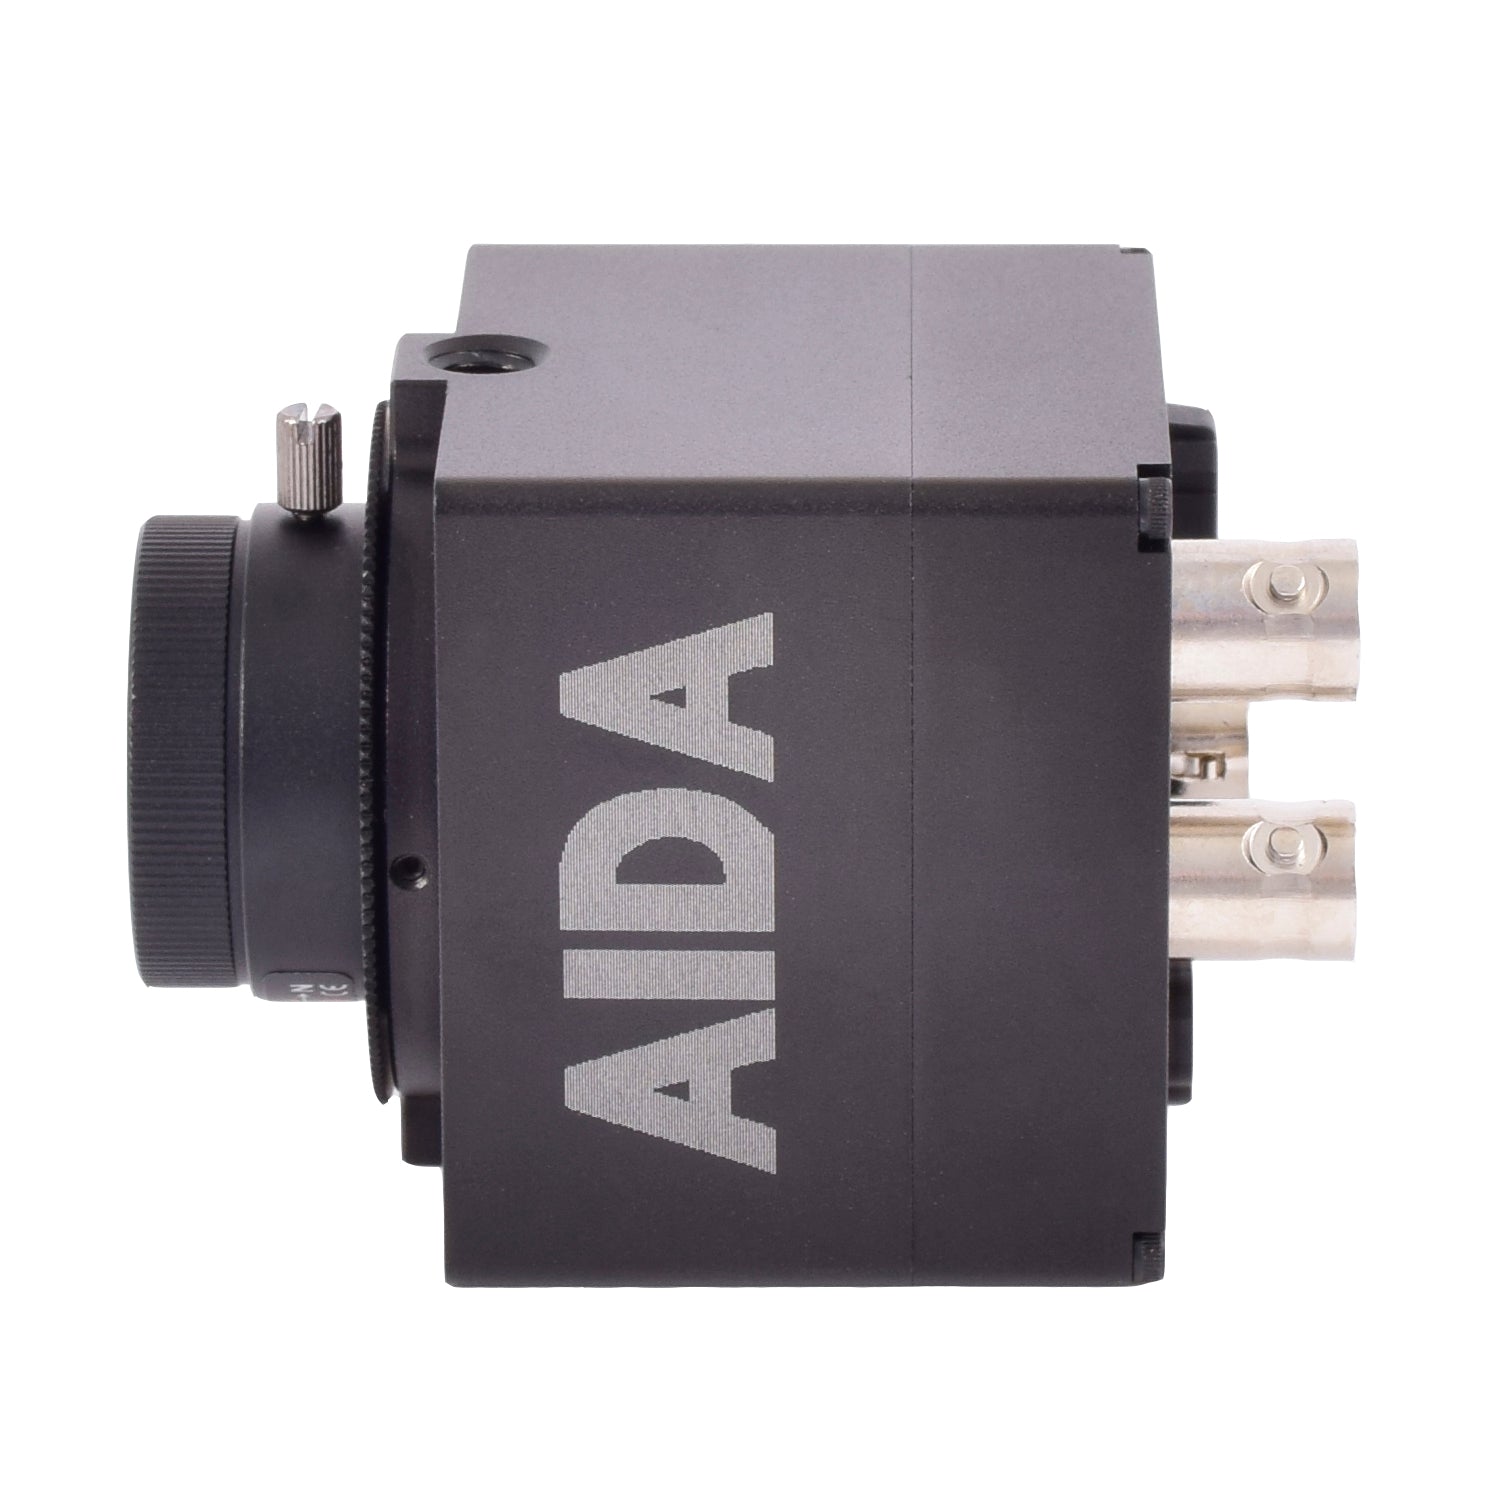 AIDA Imaging 3G-SDI/HDMI Full HD Genlock Camera in a Side View